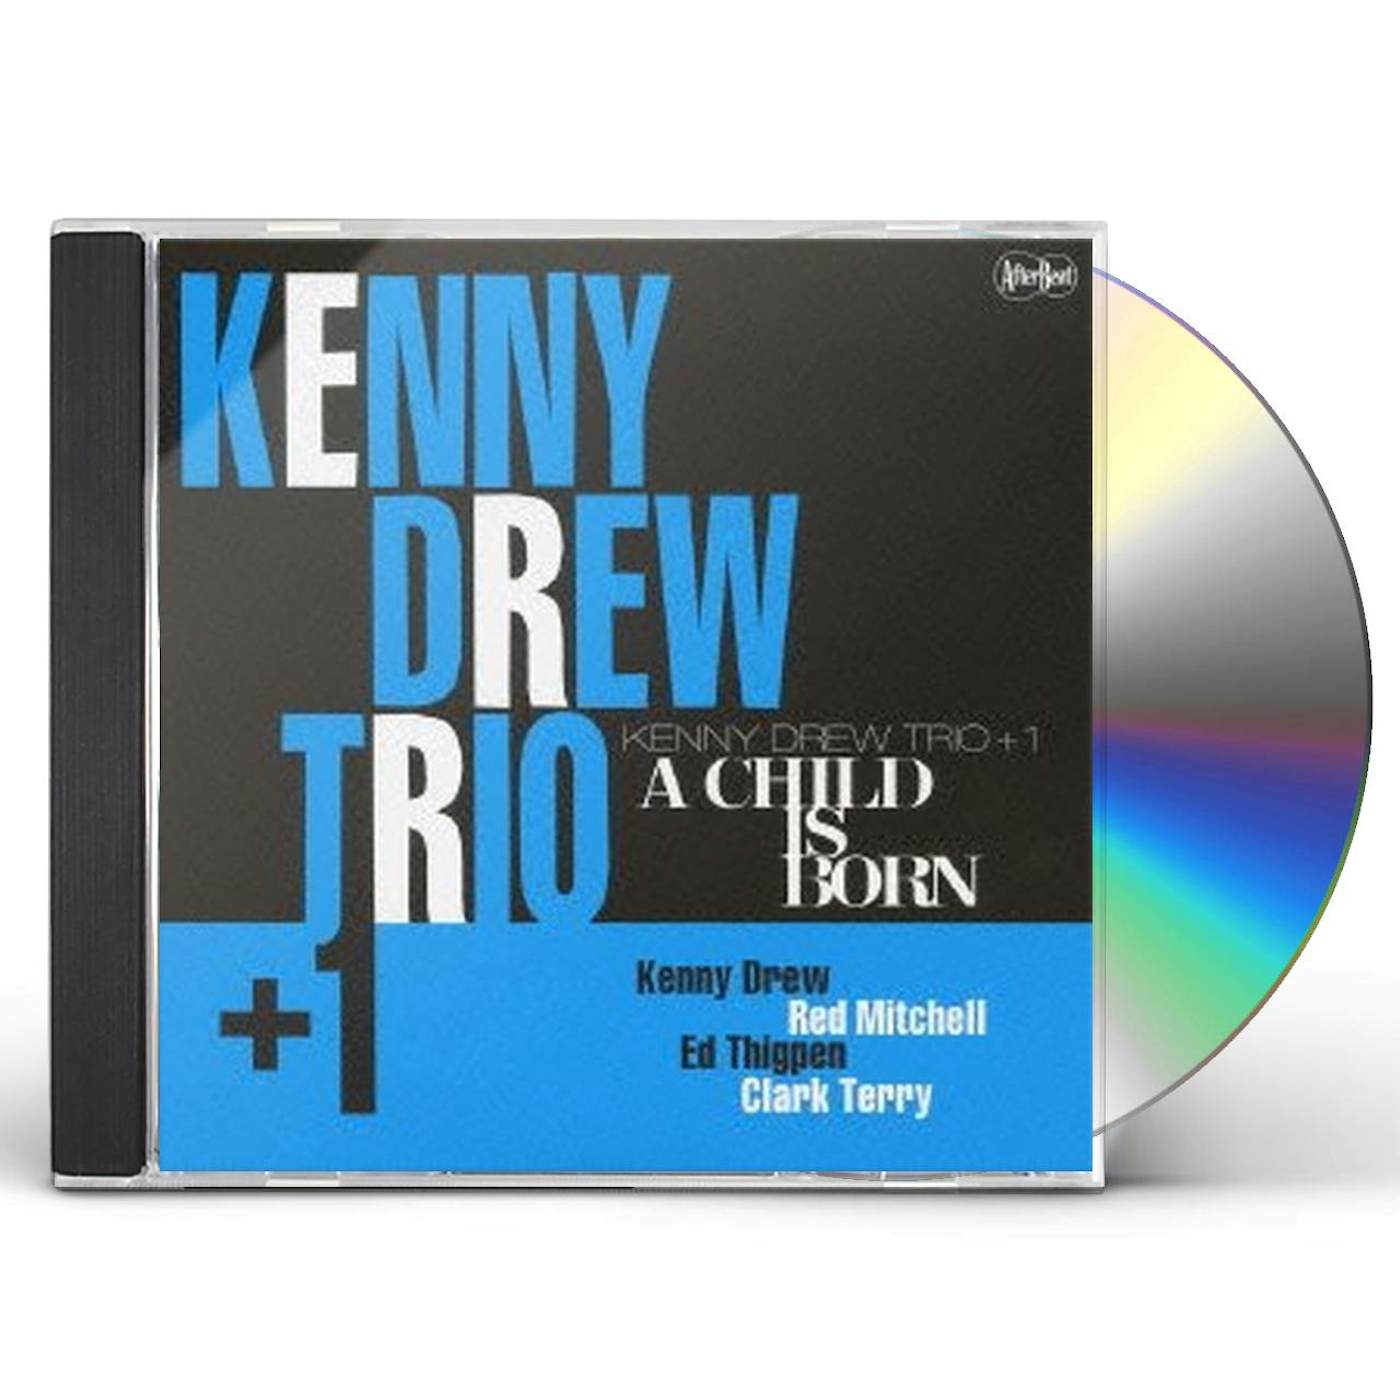 Kenny Drew CHILD IS BORN CD